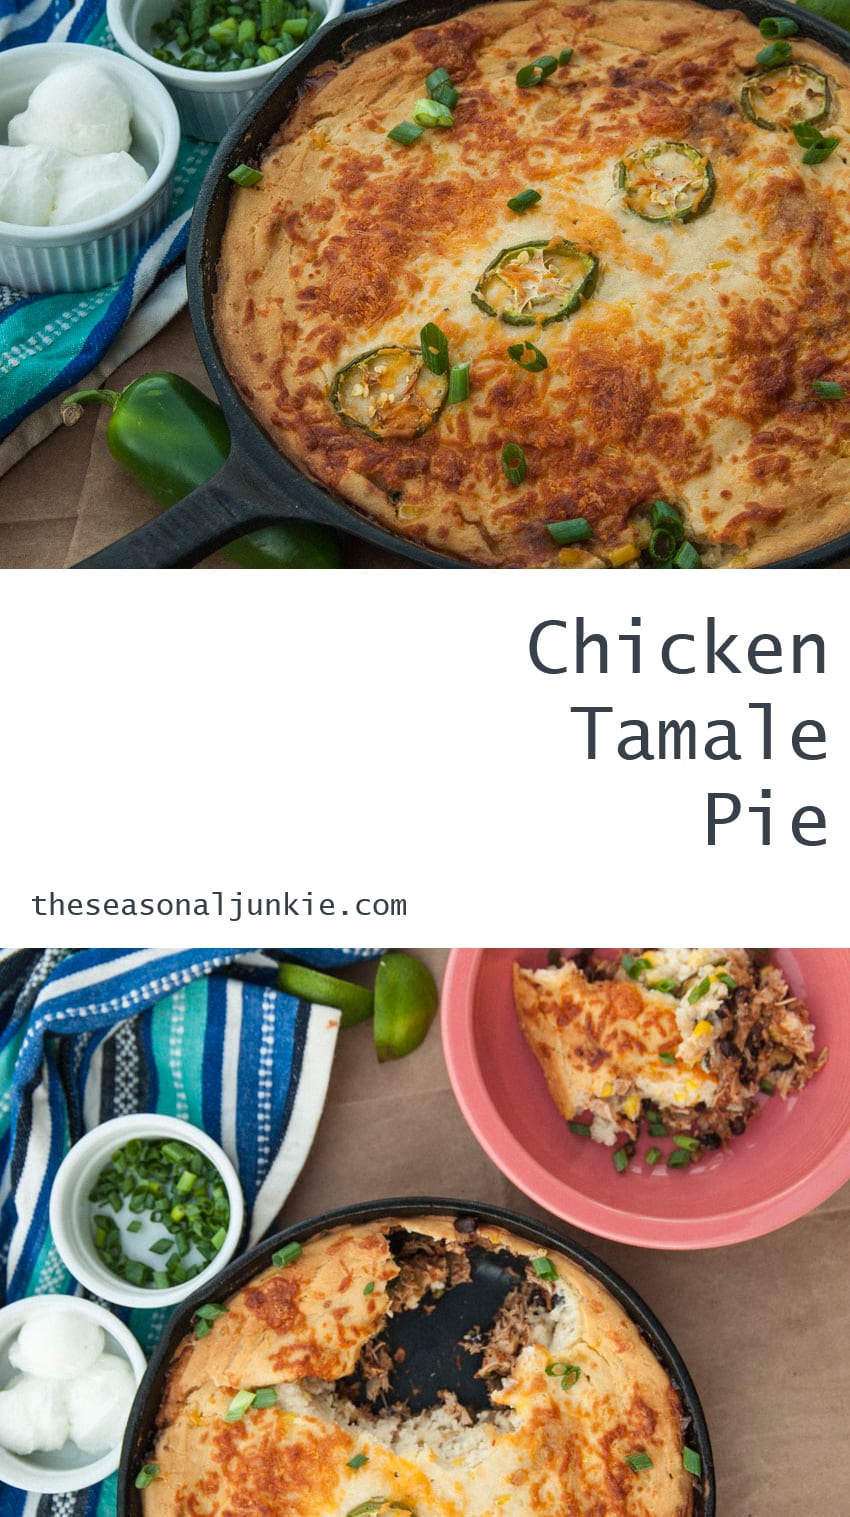 Chicken Tamale Pie » The Seasonal Junkie